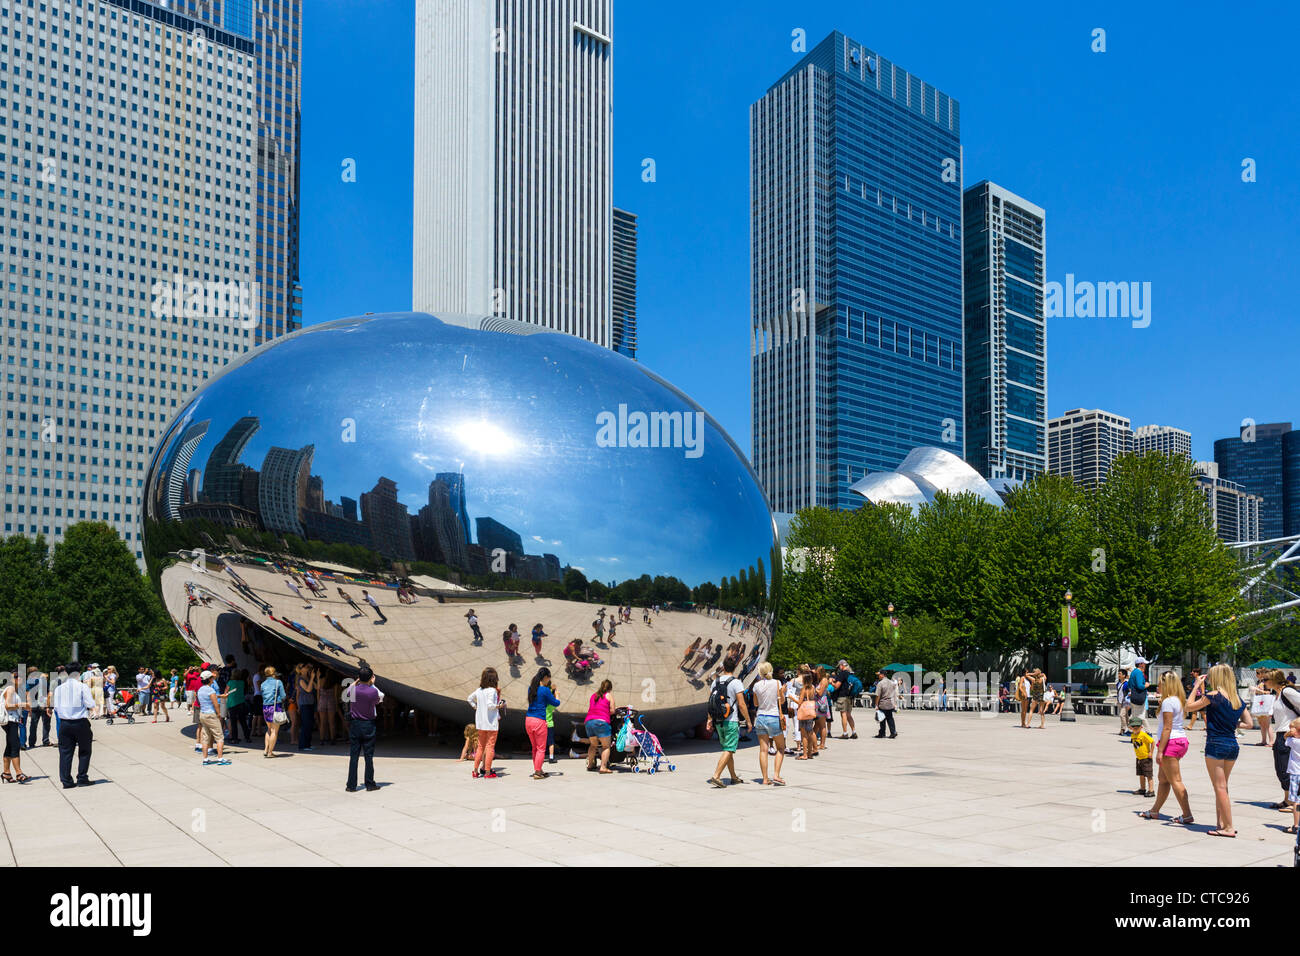 Anish Kapoor's 'Cloud Gate' sculpture in Millennium Park, Chicago, Illinois, USA Stock Photo